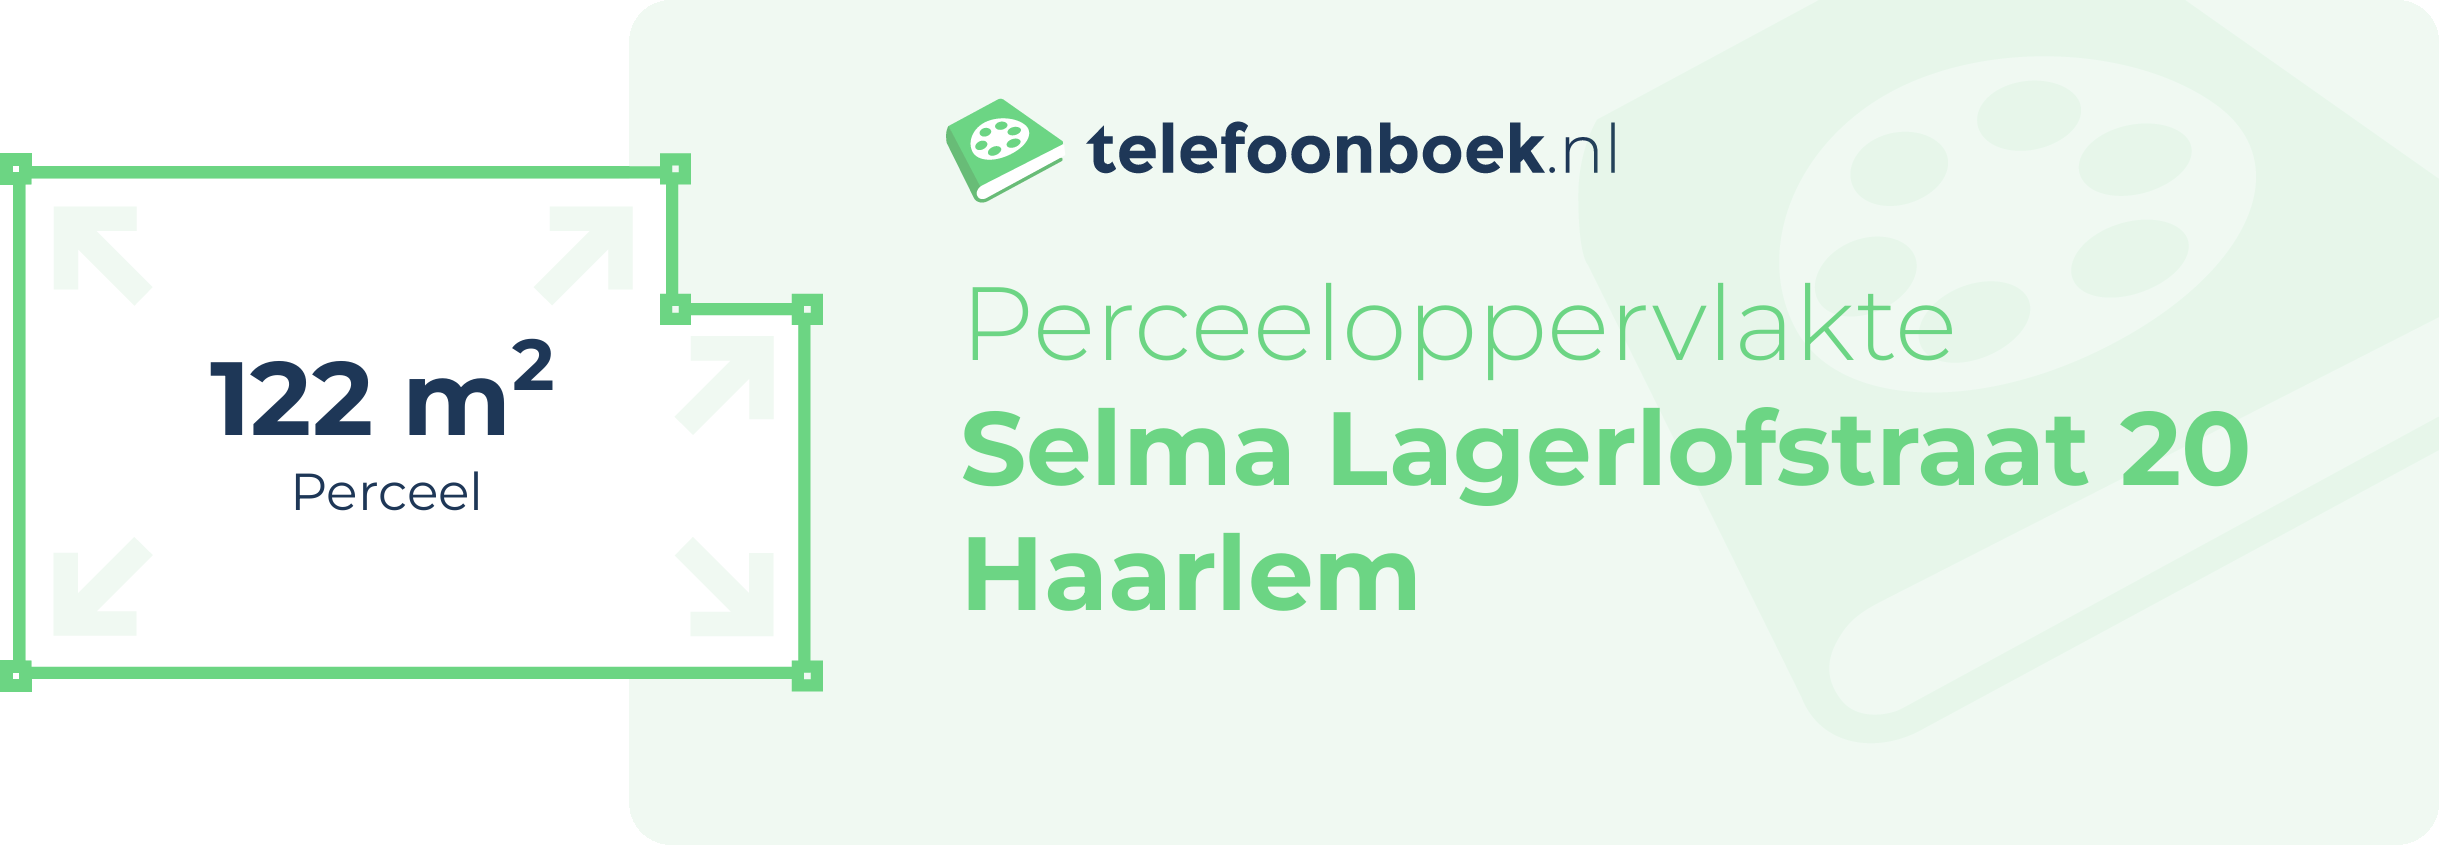 Perceeloppervlakte Selma Lagerlofstraat 20 Haarlem